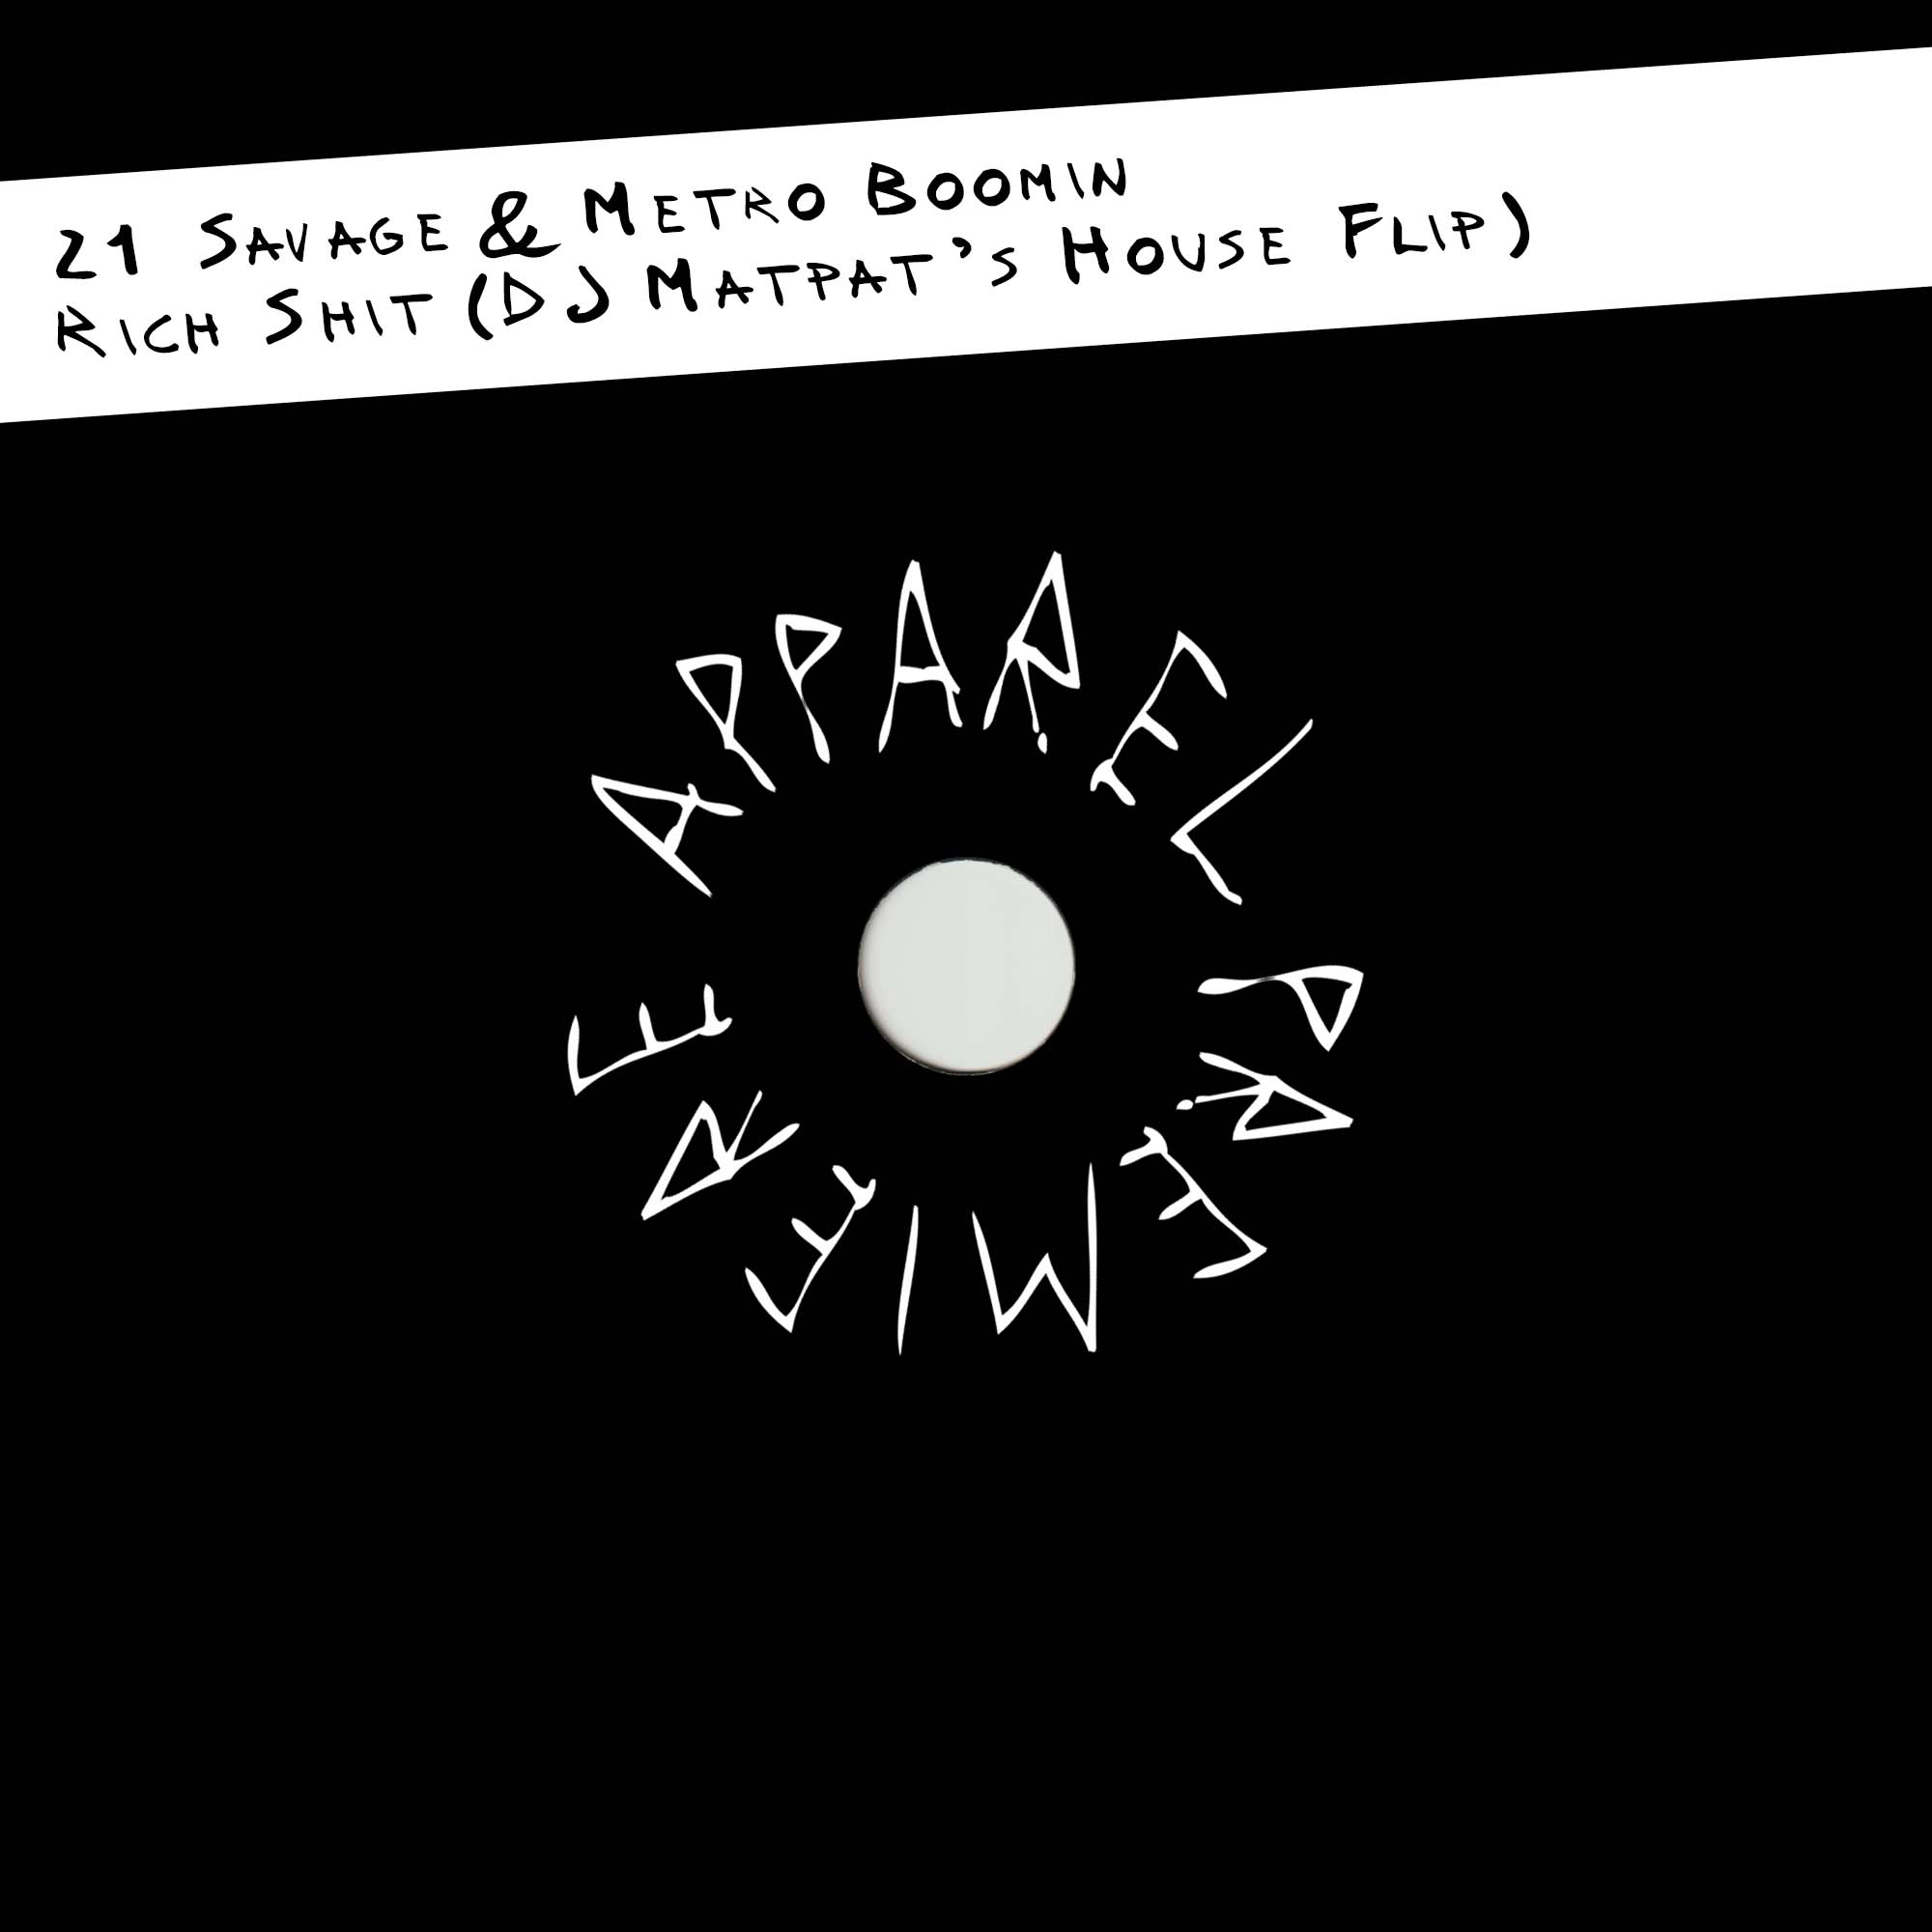 APPAREL PREMIERE 21 Savage & Metro Boomin – Rich Shit (DJ Matpat’s House Flip)